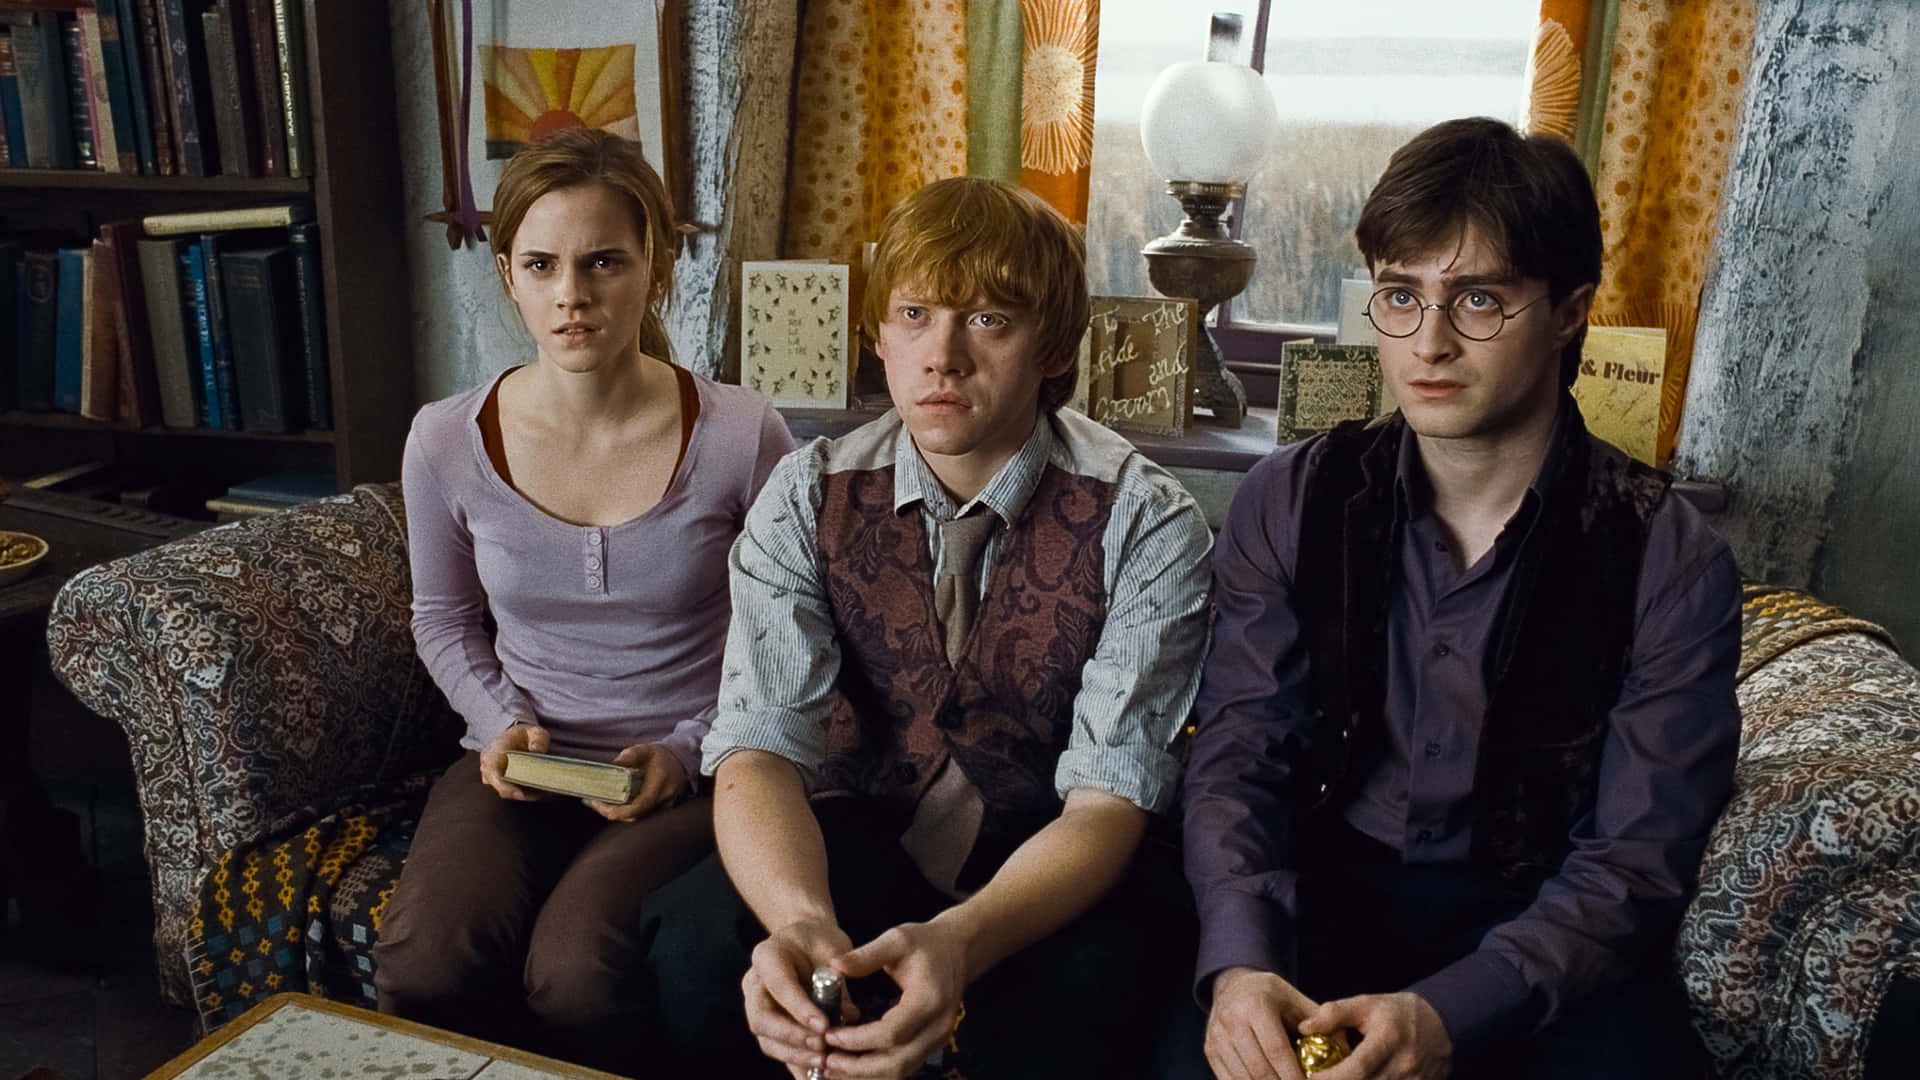 Download Harry Potter Landscape Ron Hermione Couch Wallpaper | Wallpapers .com